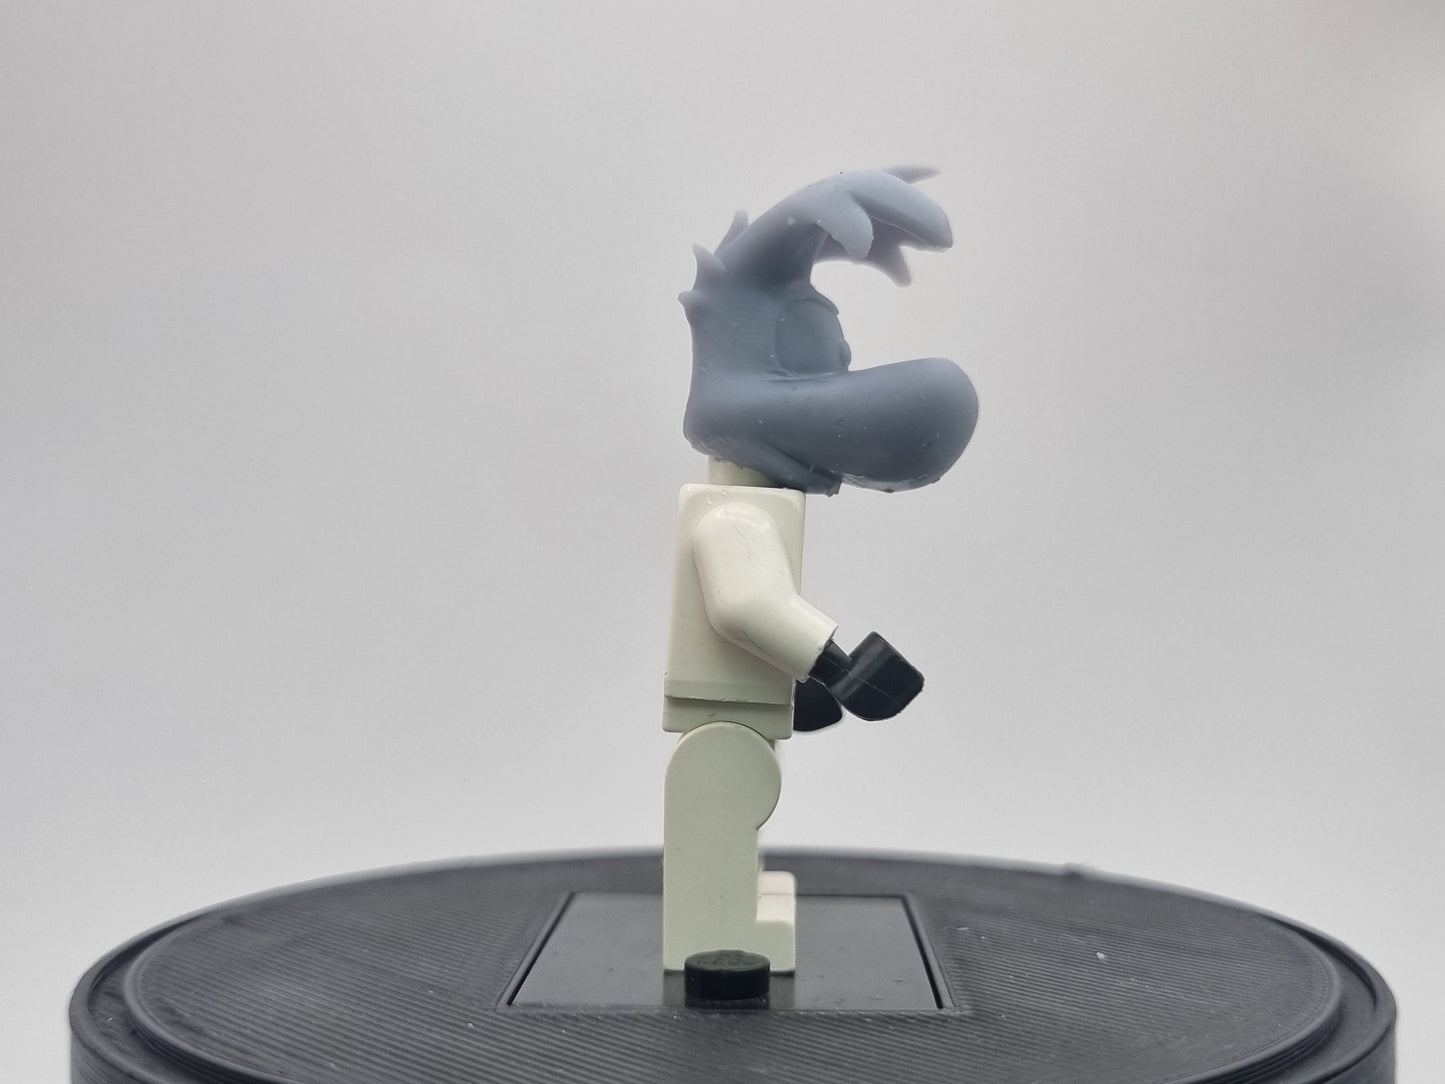 Building toy custom 3D printed beam man head!